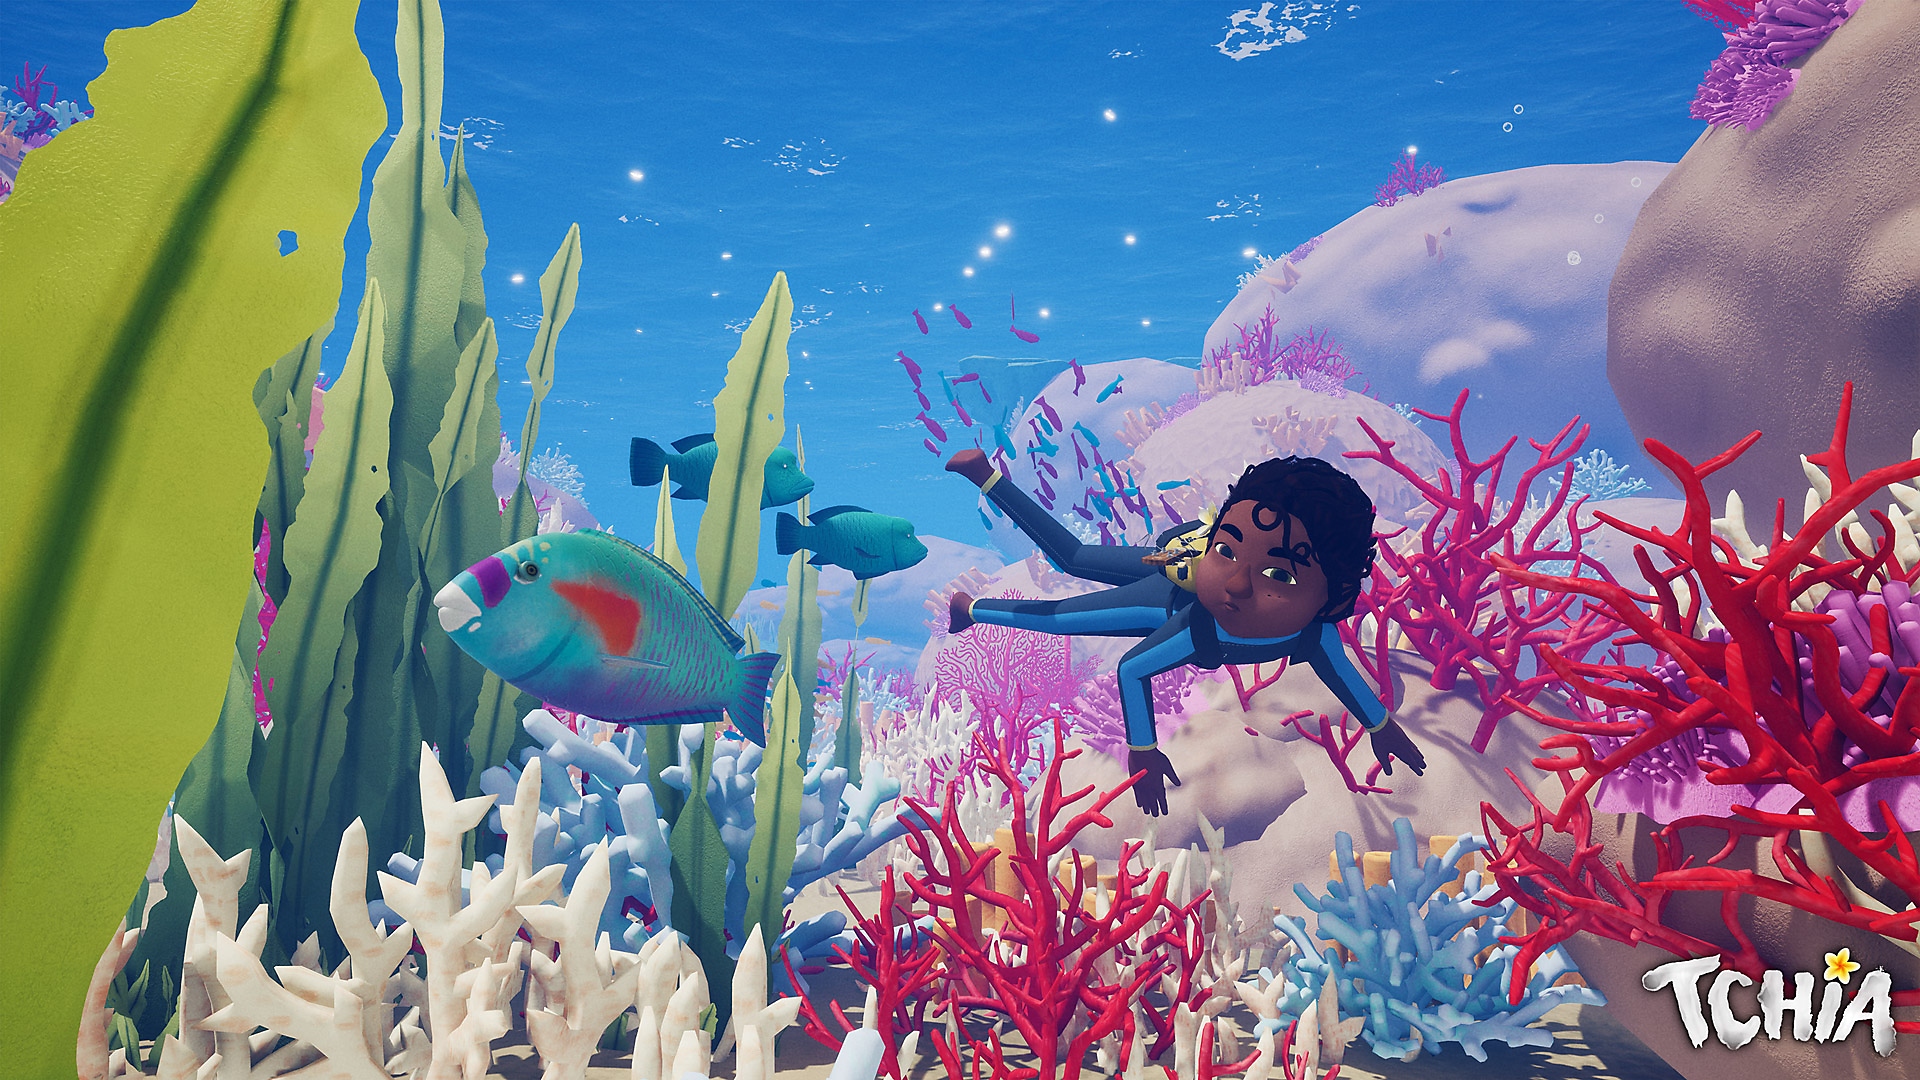 Tchia hero artwork featuring the main character swimming through an underwater scene